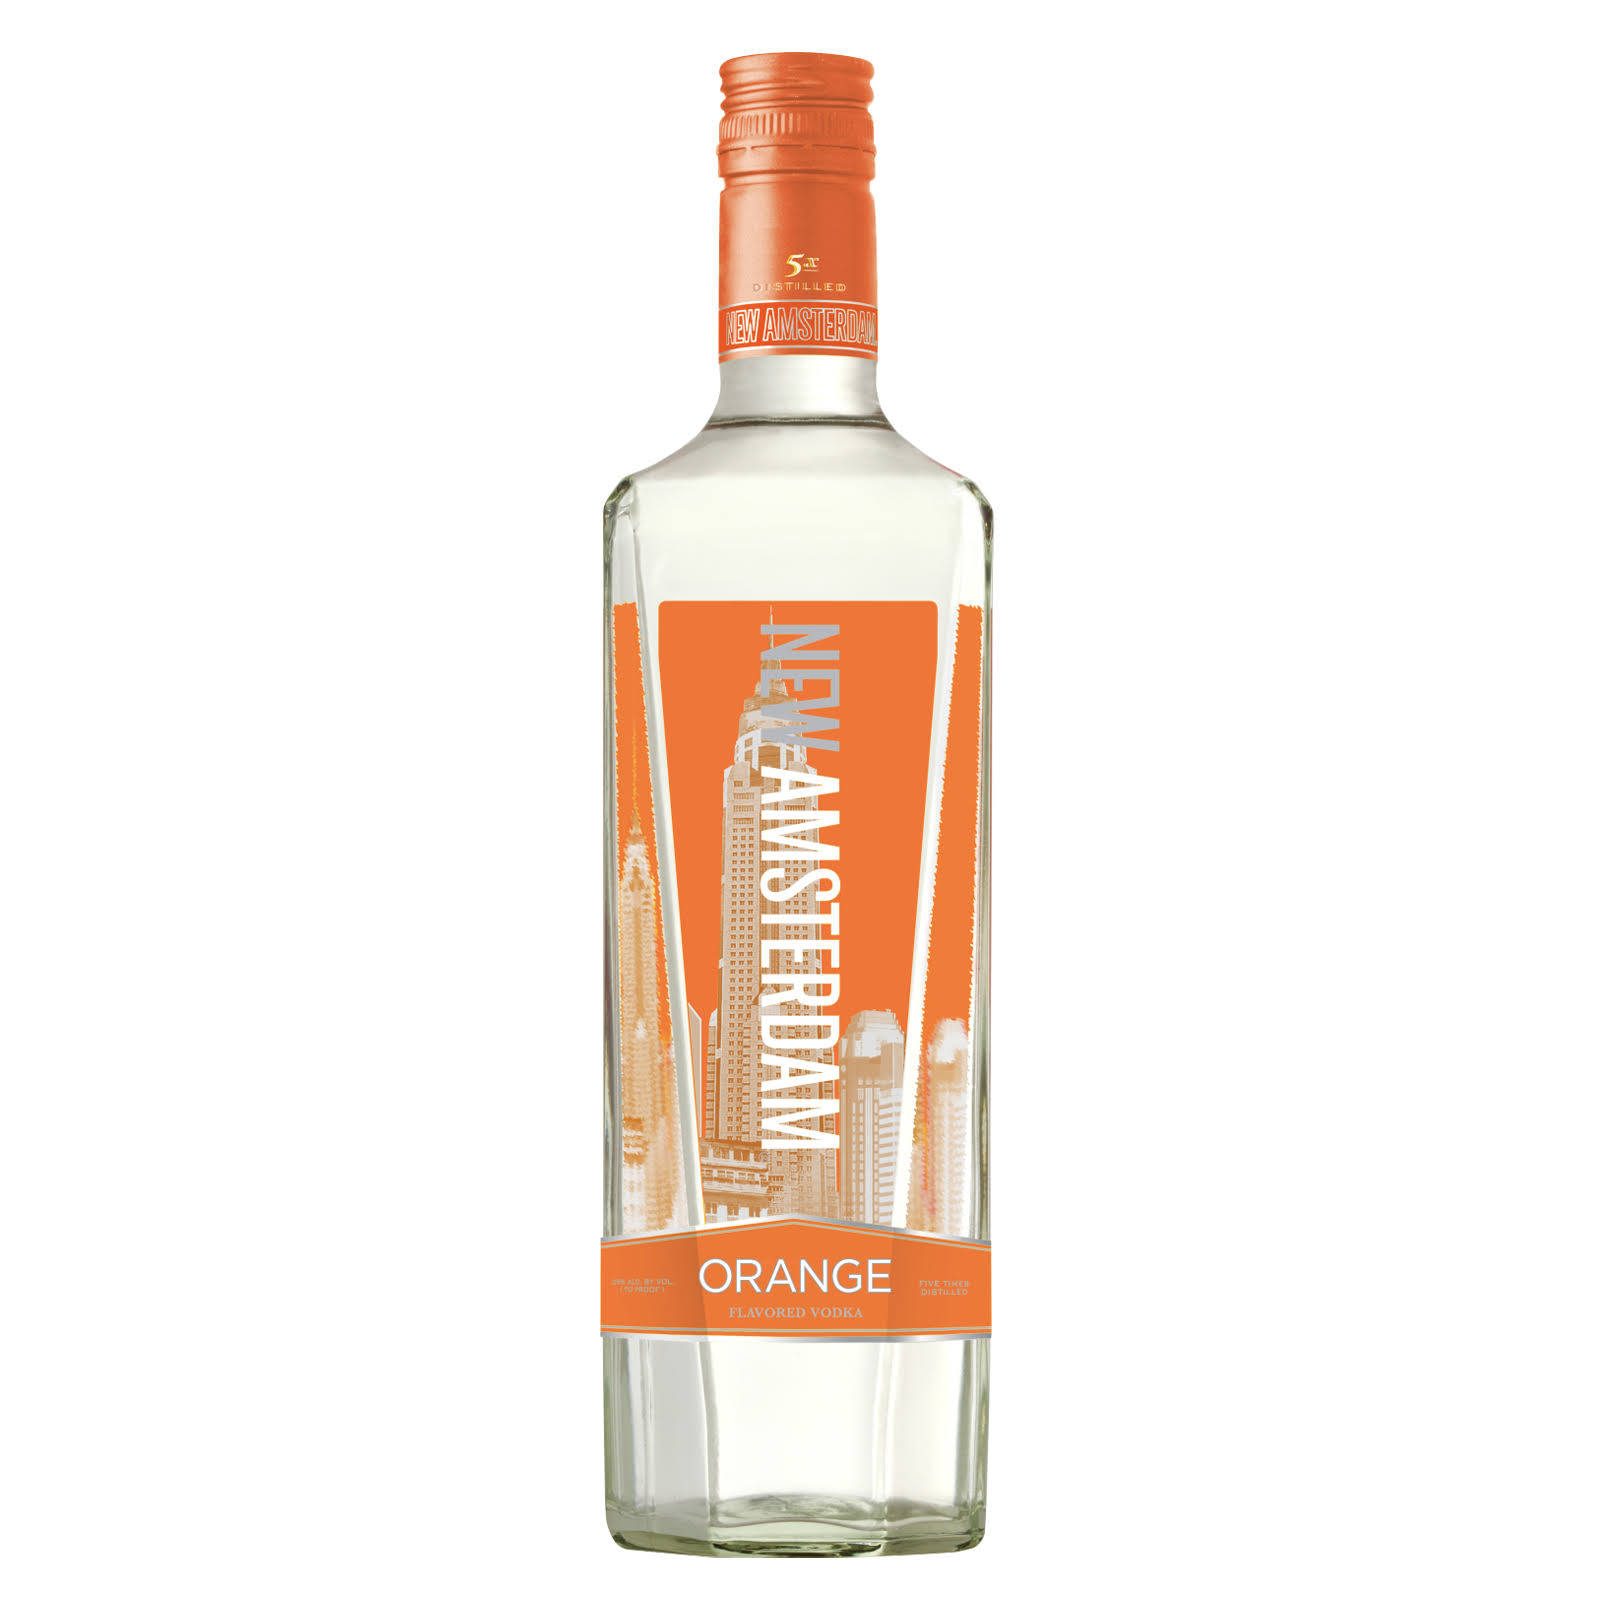 New Amsterdam Vodka, Orange Flavored - 750 ml